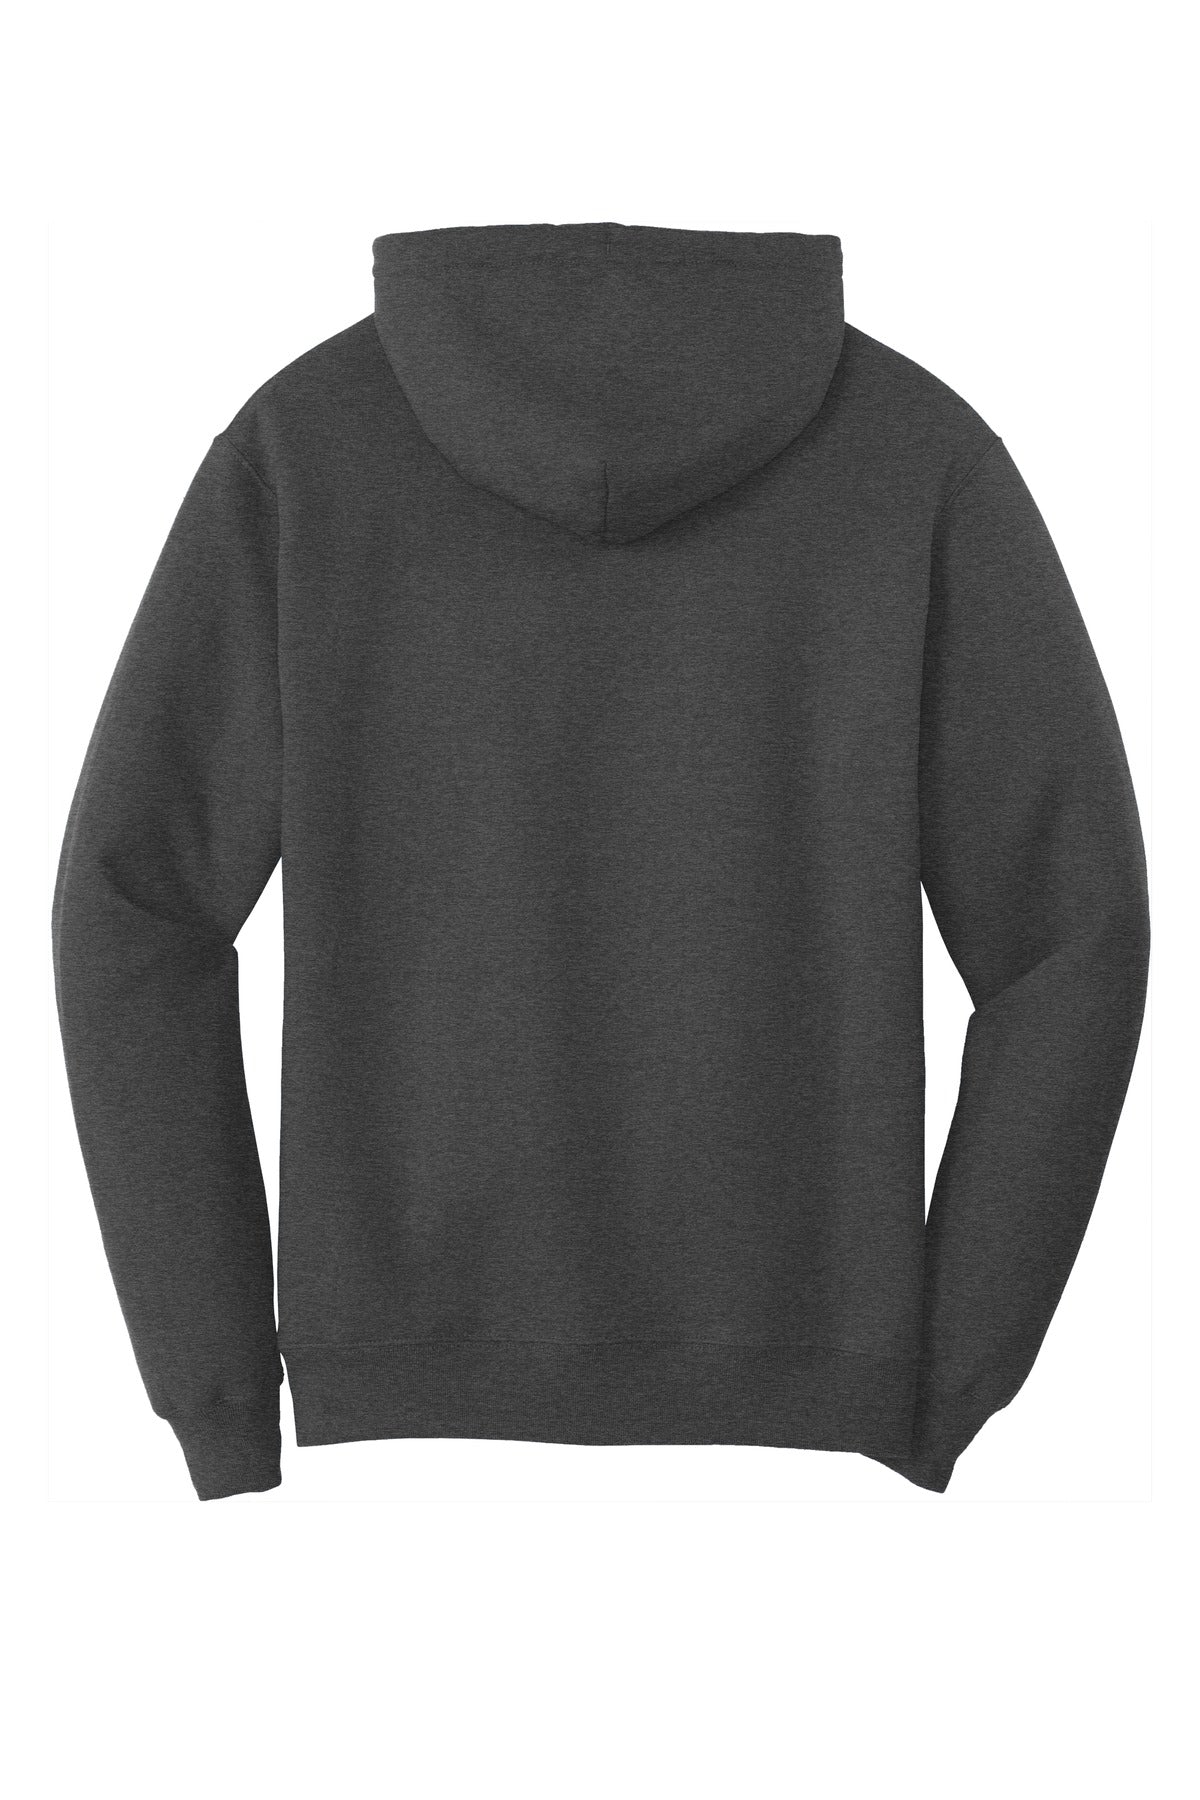 Port & Company - Core Fleece Pullover Hooded Sweatshirt. PC78H